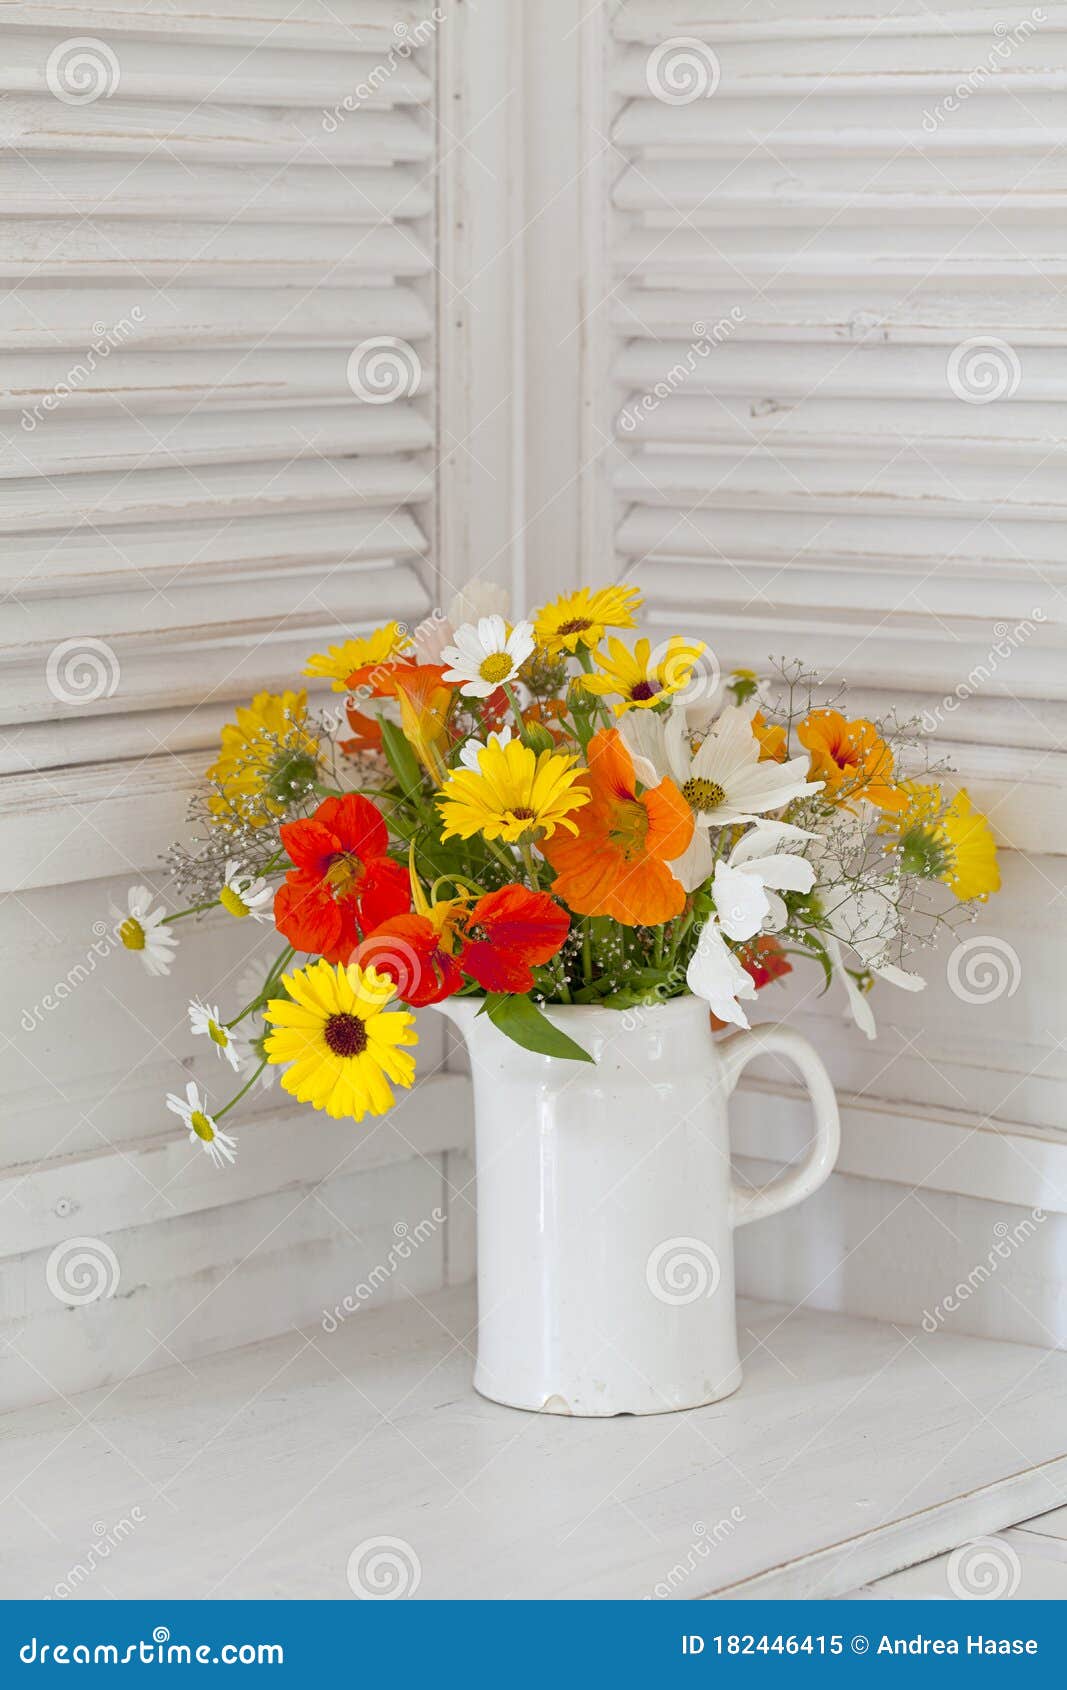 Yellow Orange Flower Bouquet In Ceramic Mug Stock Image Image Of Nasturtium Daisy 182446415